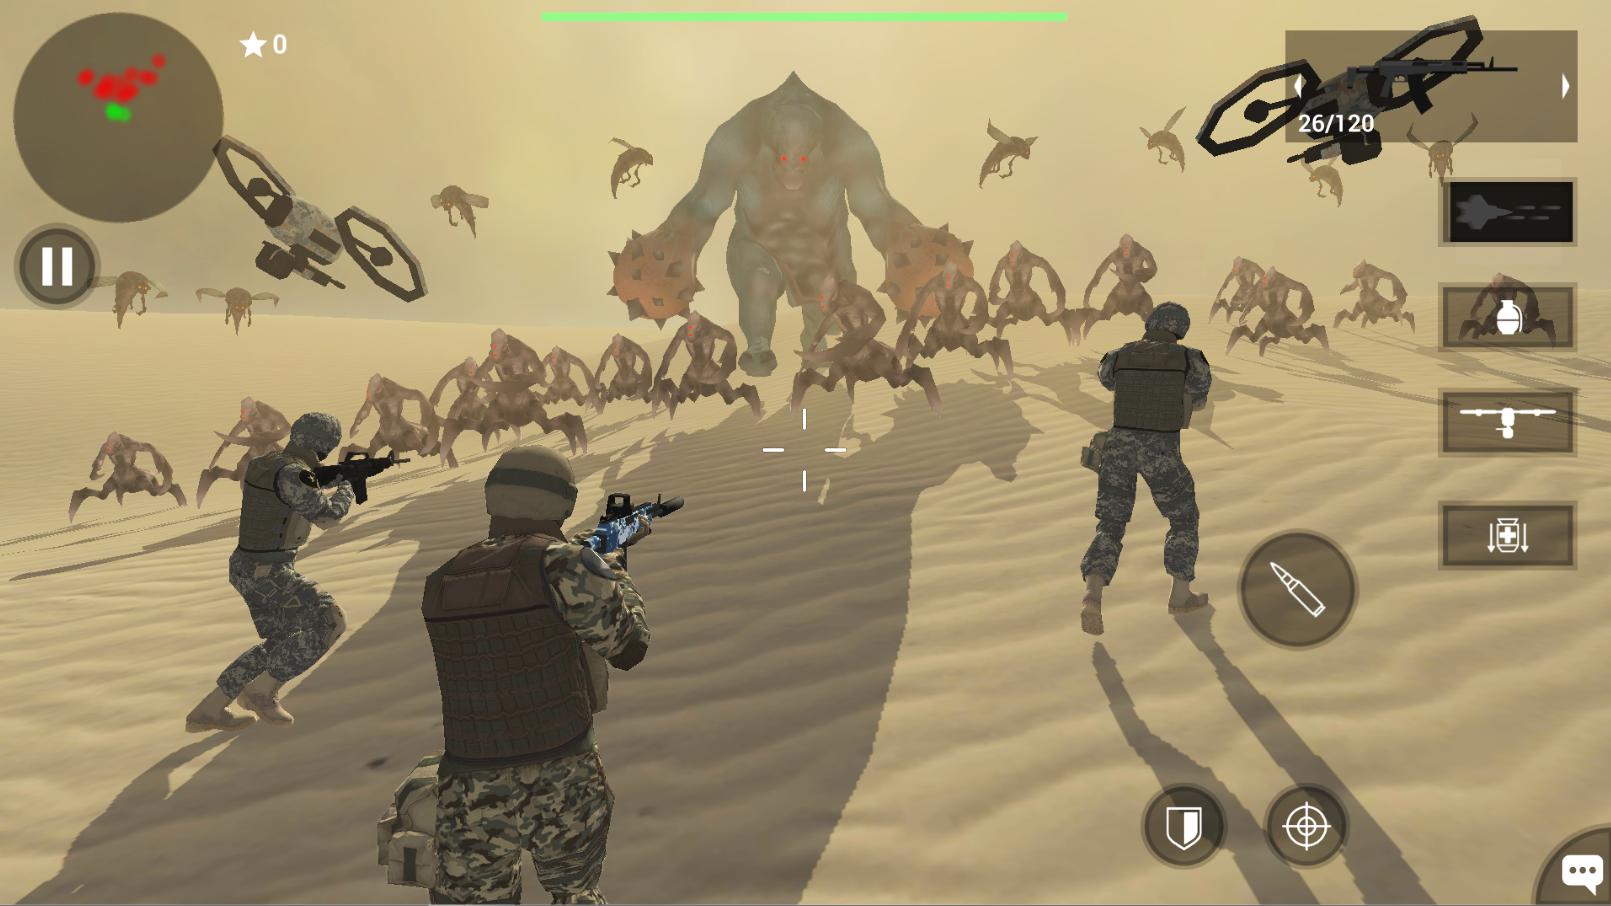 Earth Protect Squad Third Person Shooting Game 2.00.32b Screenshot 5